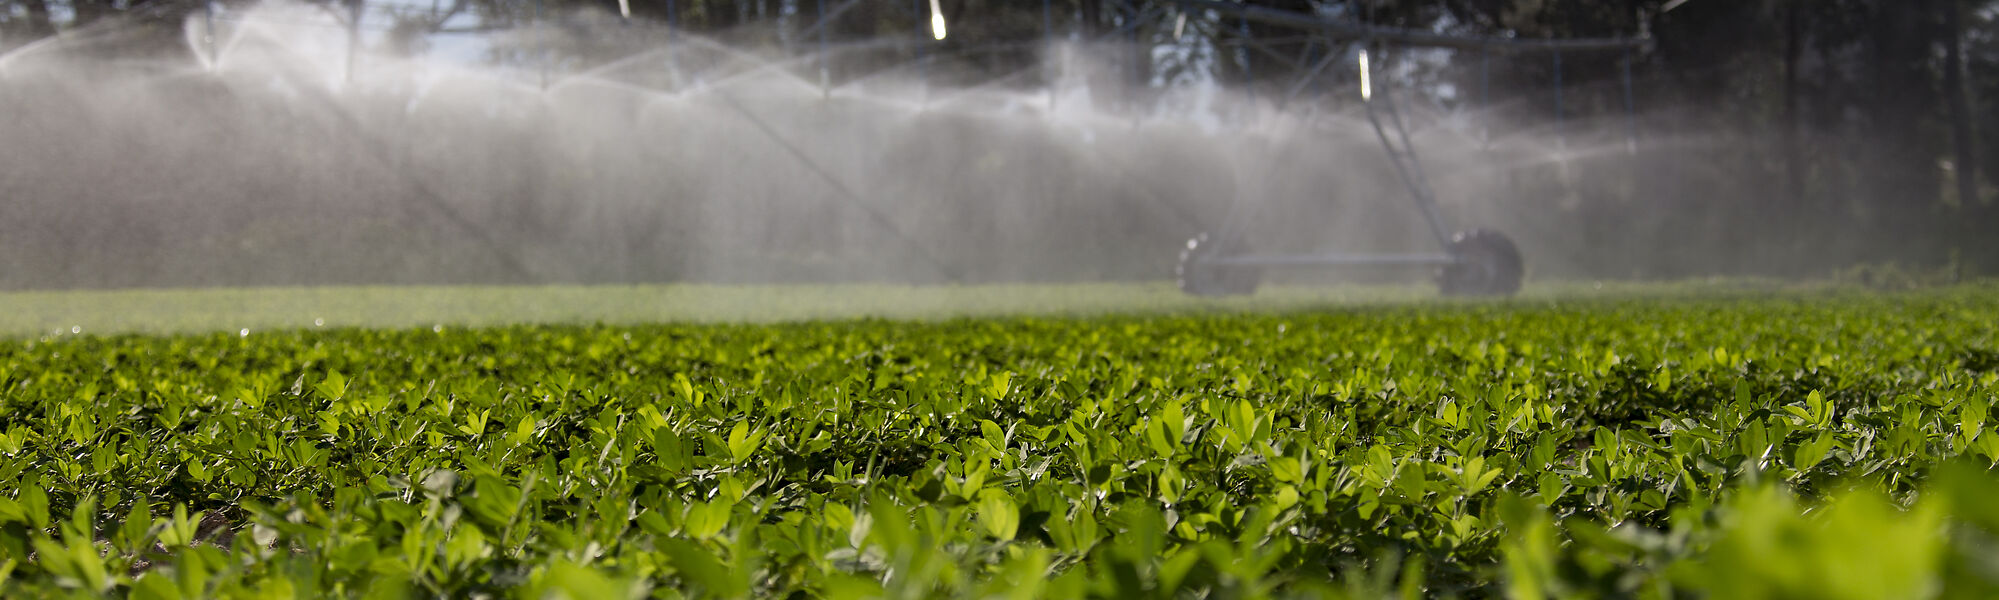 Nelson peanut sprinkler irrigation system for farms